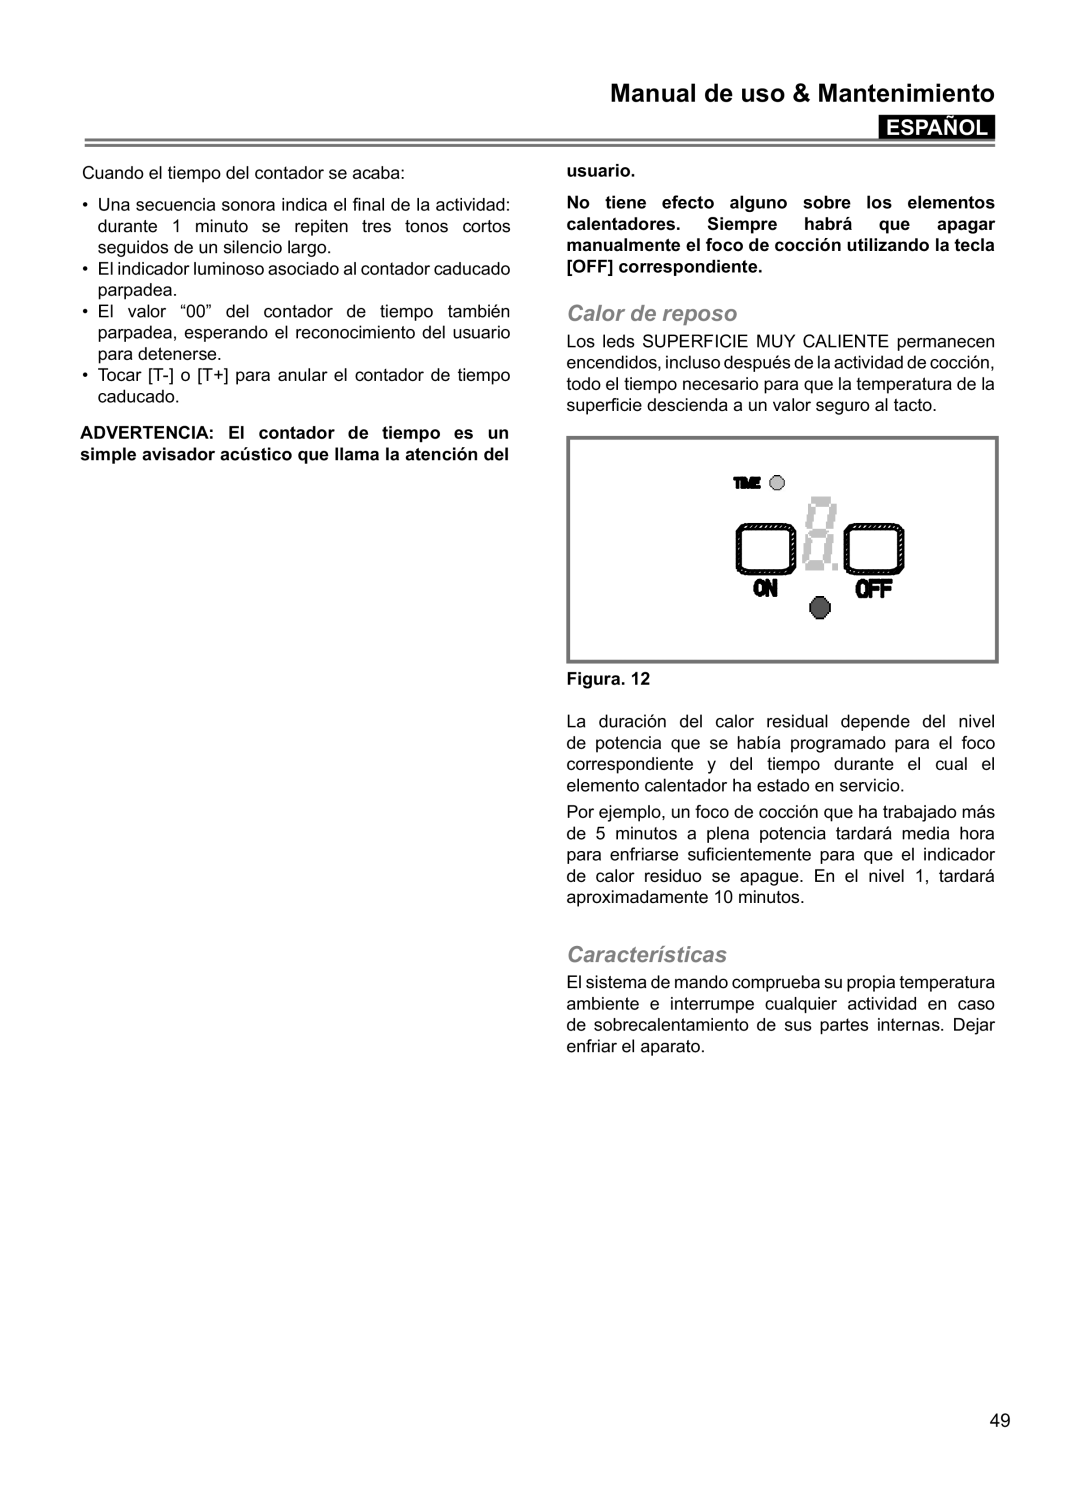 Blomberg CTE 30400, CTE 36500 manuel dutilisation Manual de uso & Mantenimiento, Español, usuario, Figura 